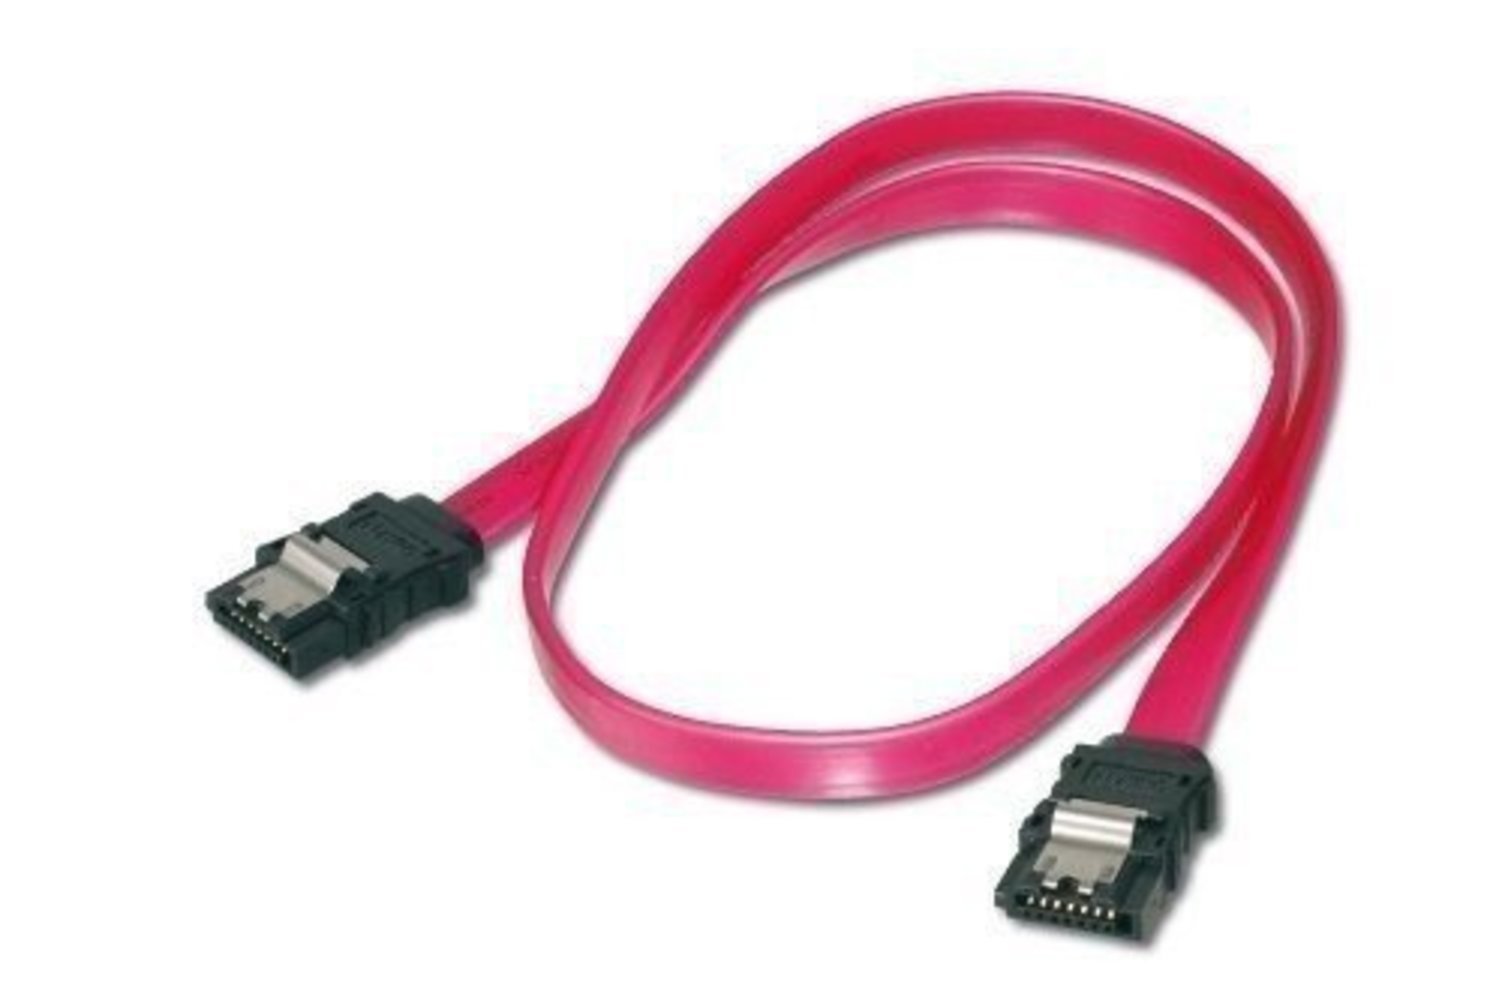  Kabel HDD SATA-II/III 50cm mit Metallclip